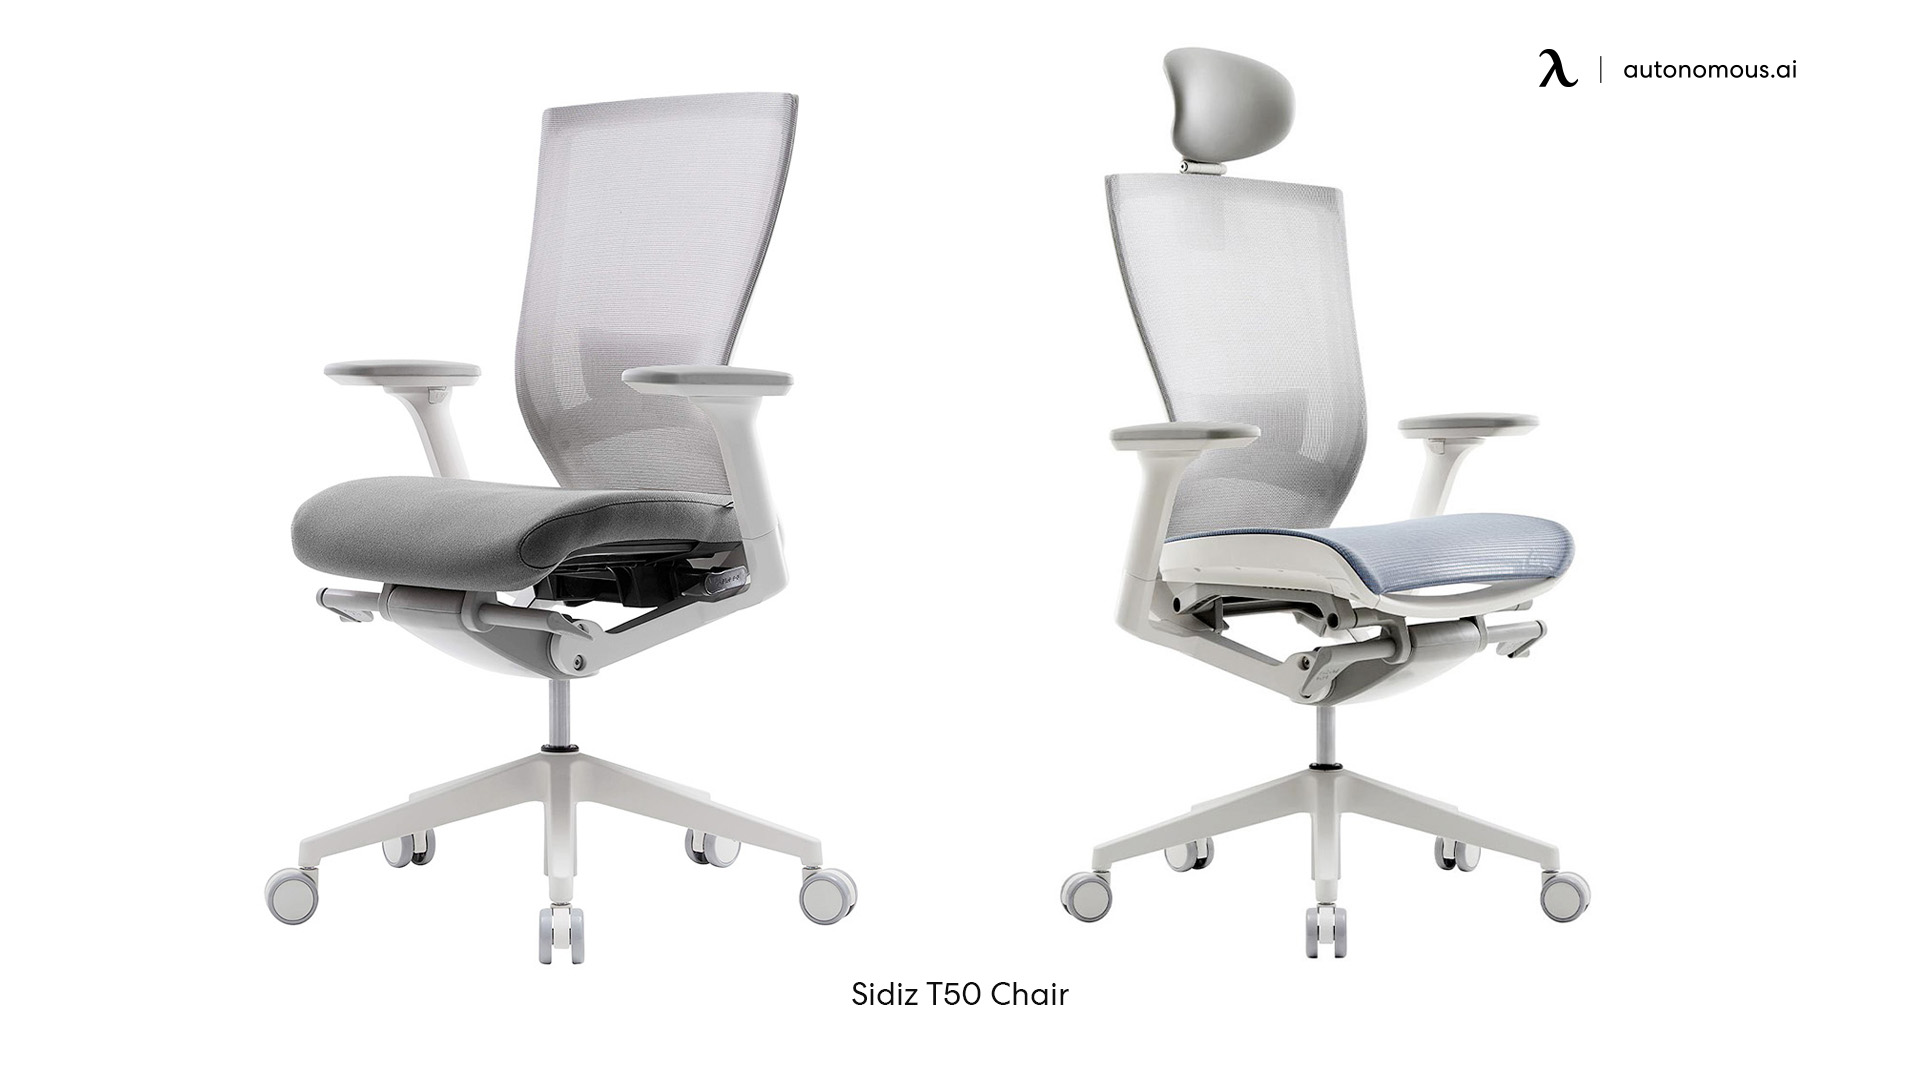 Sidiz T50 Chair